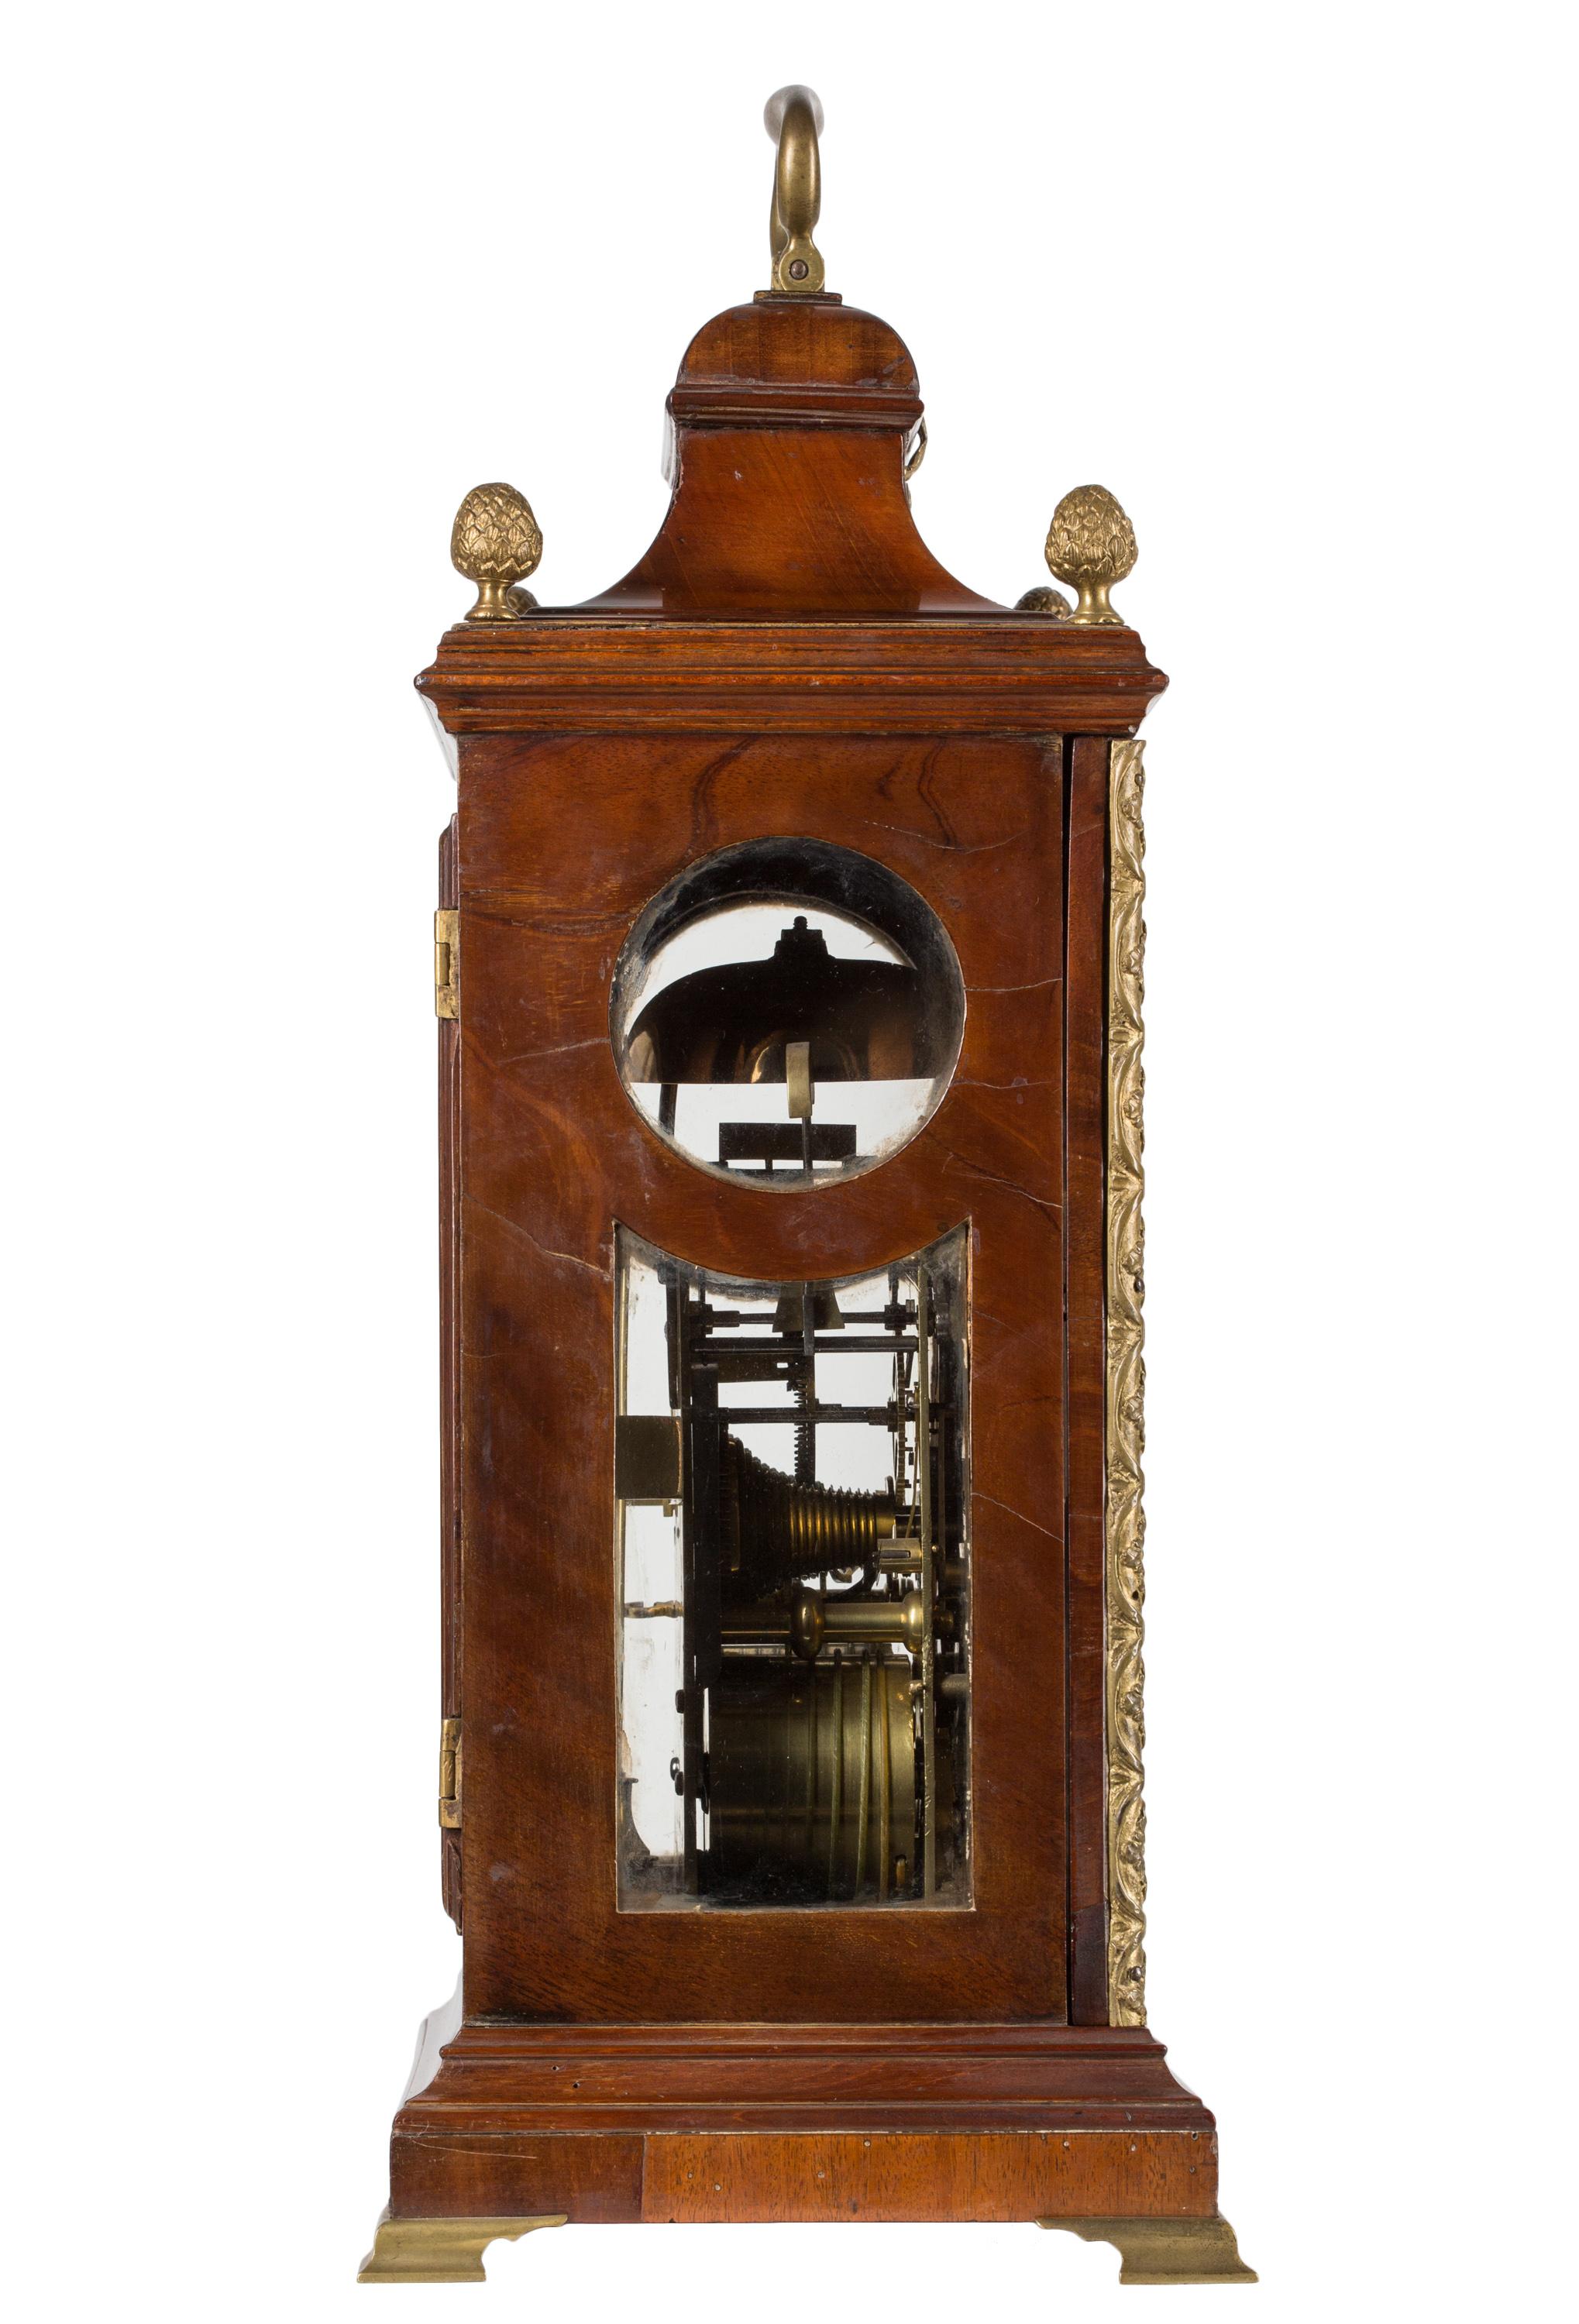 English 18th Century Moon Phase Dial Bracket Clock by Trewinnard of London